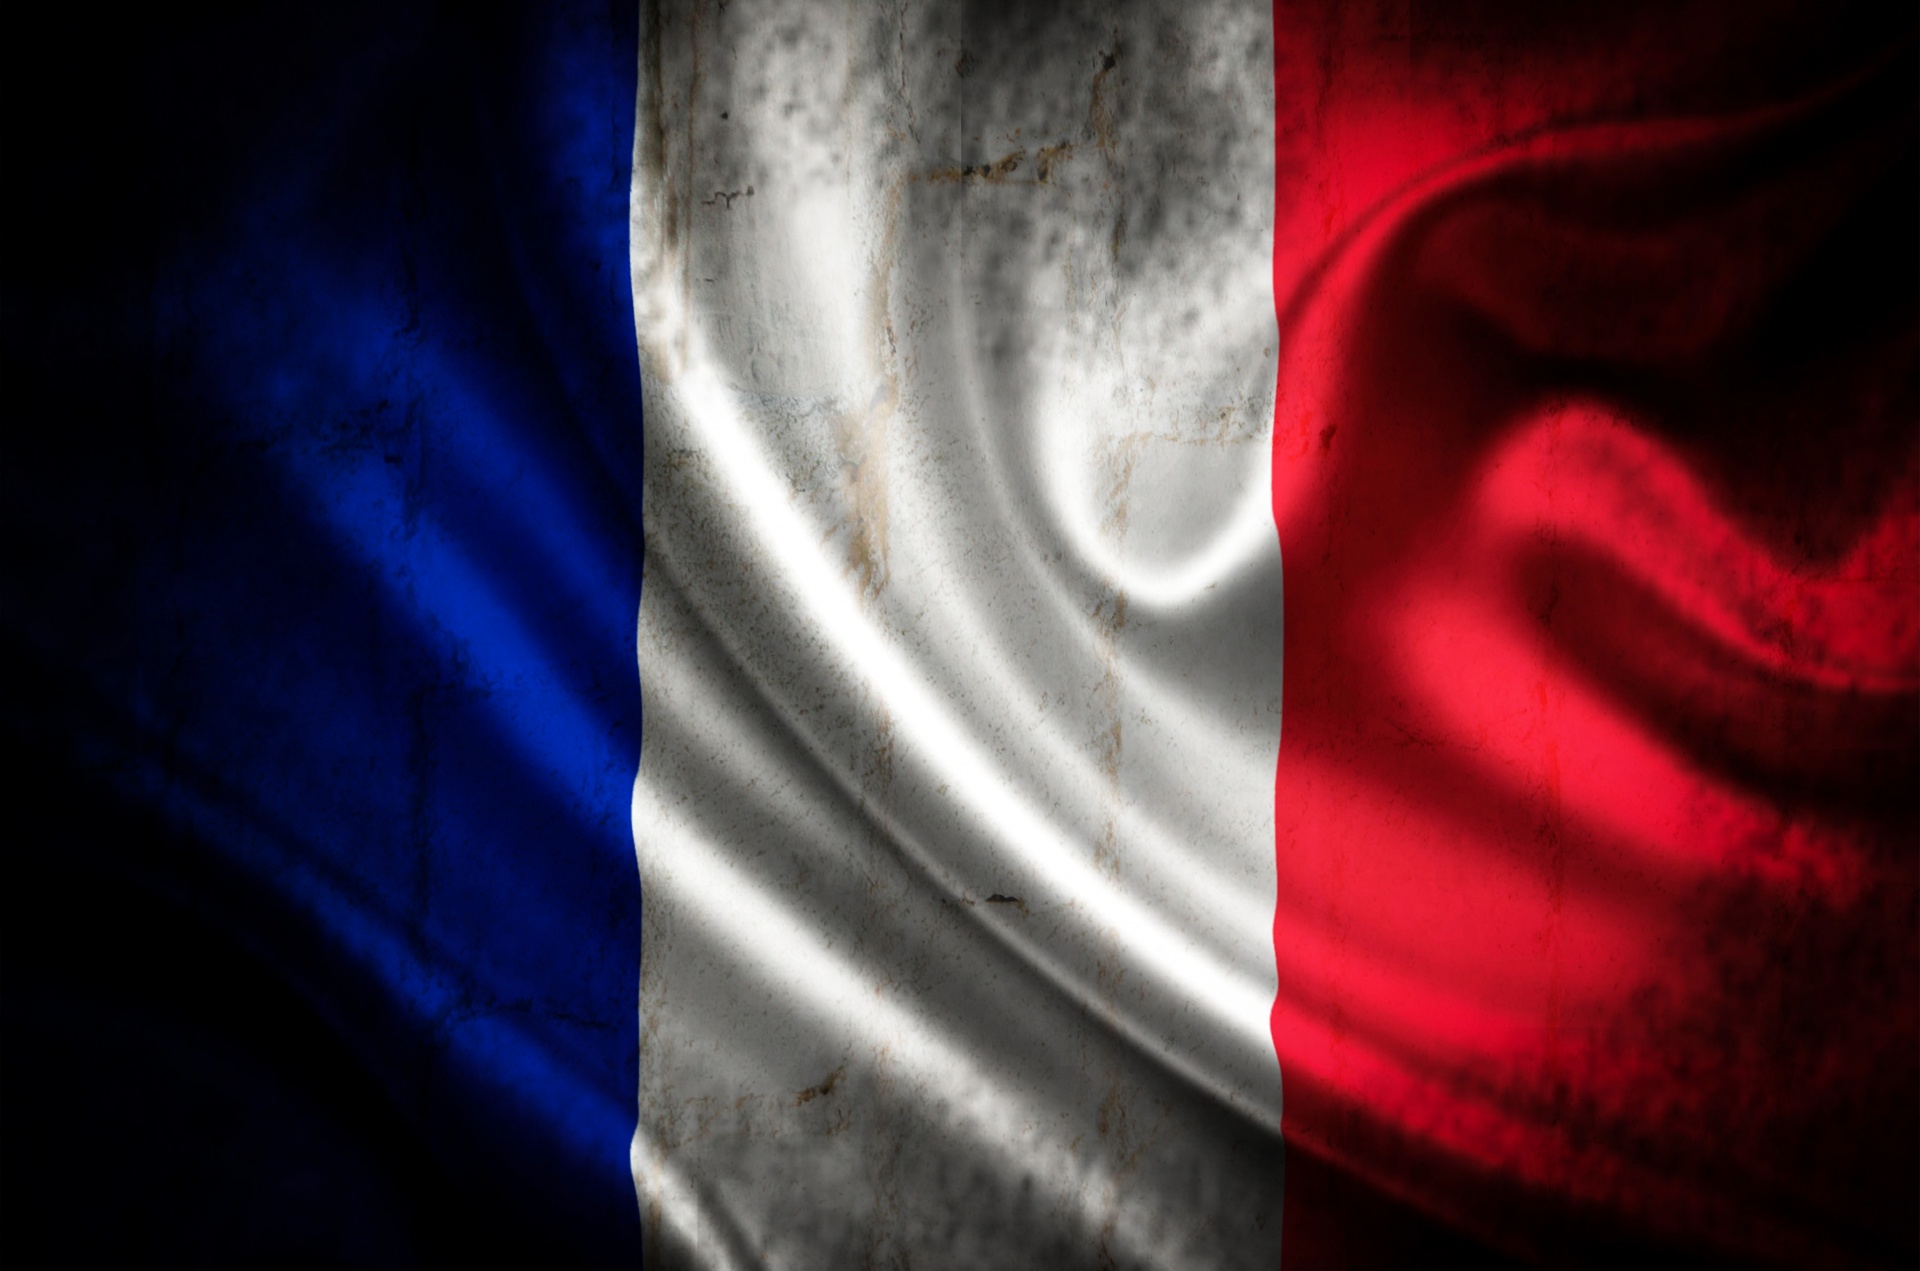 Grunge France Flag